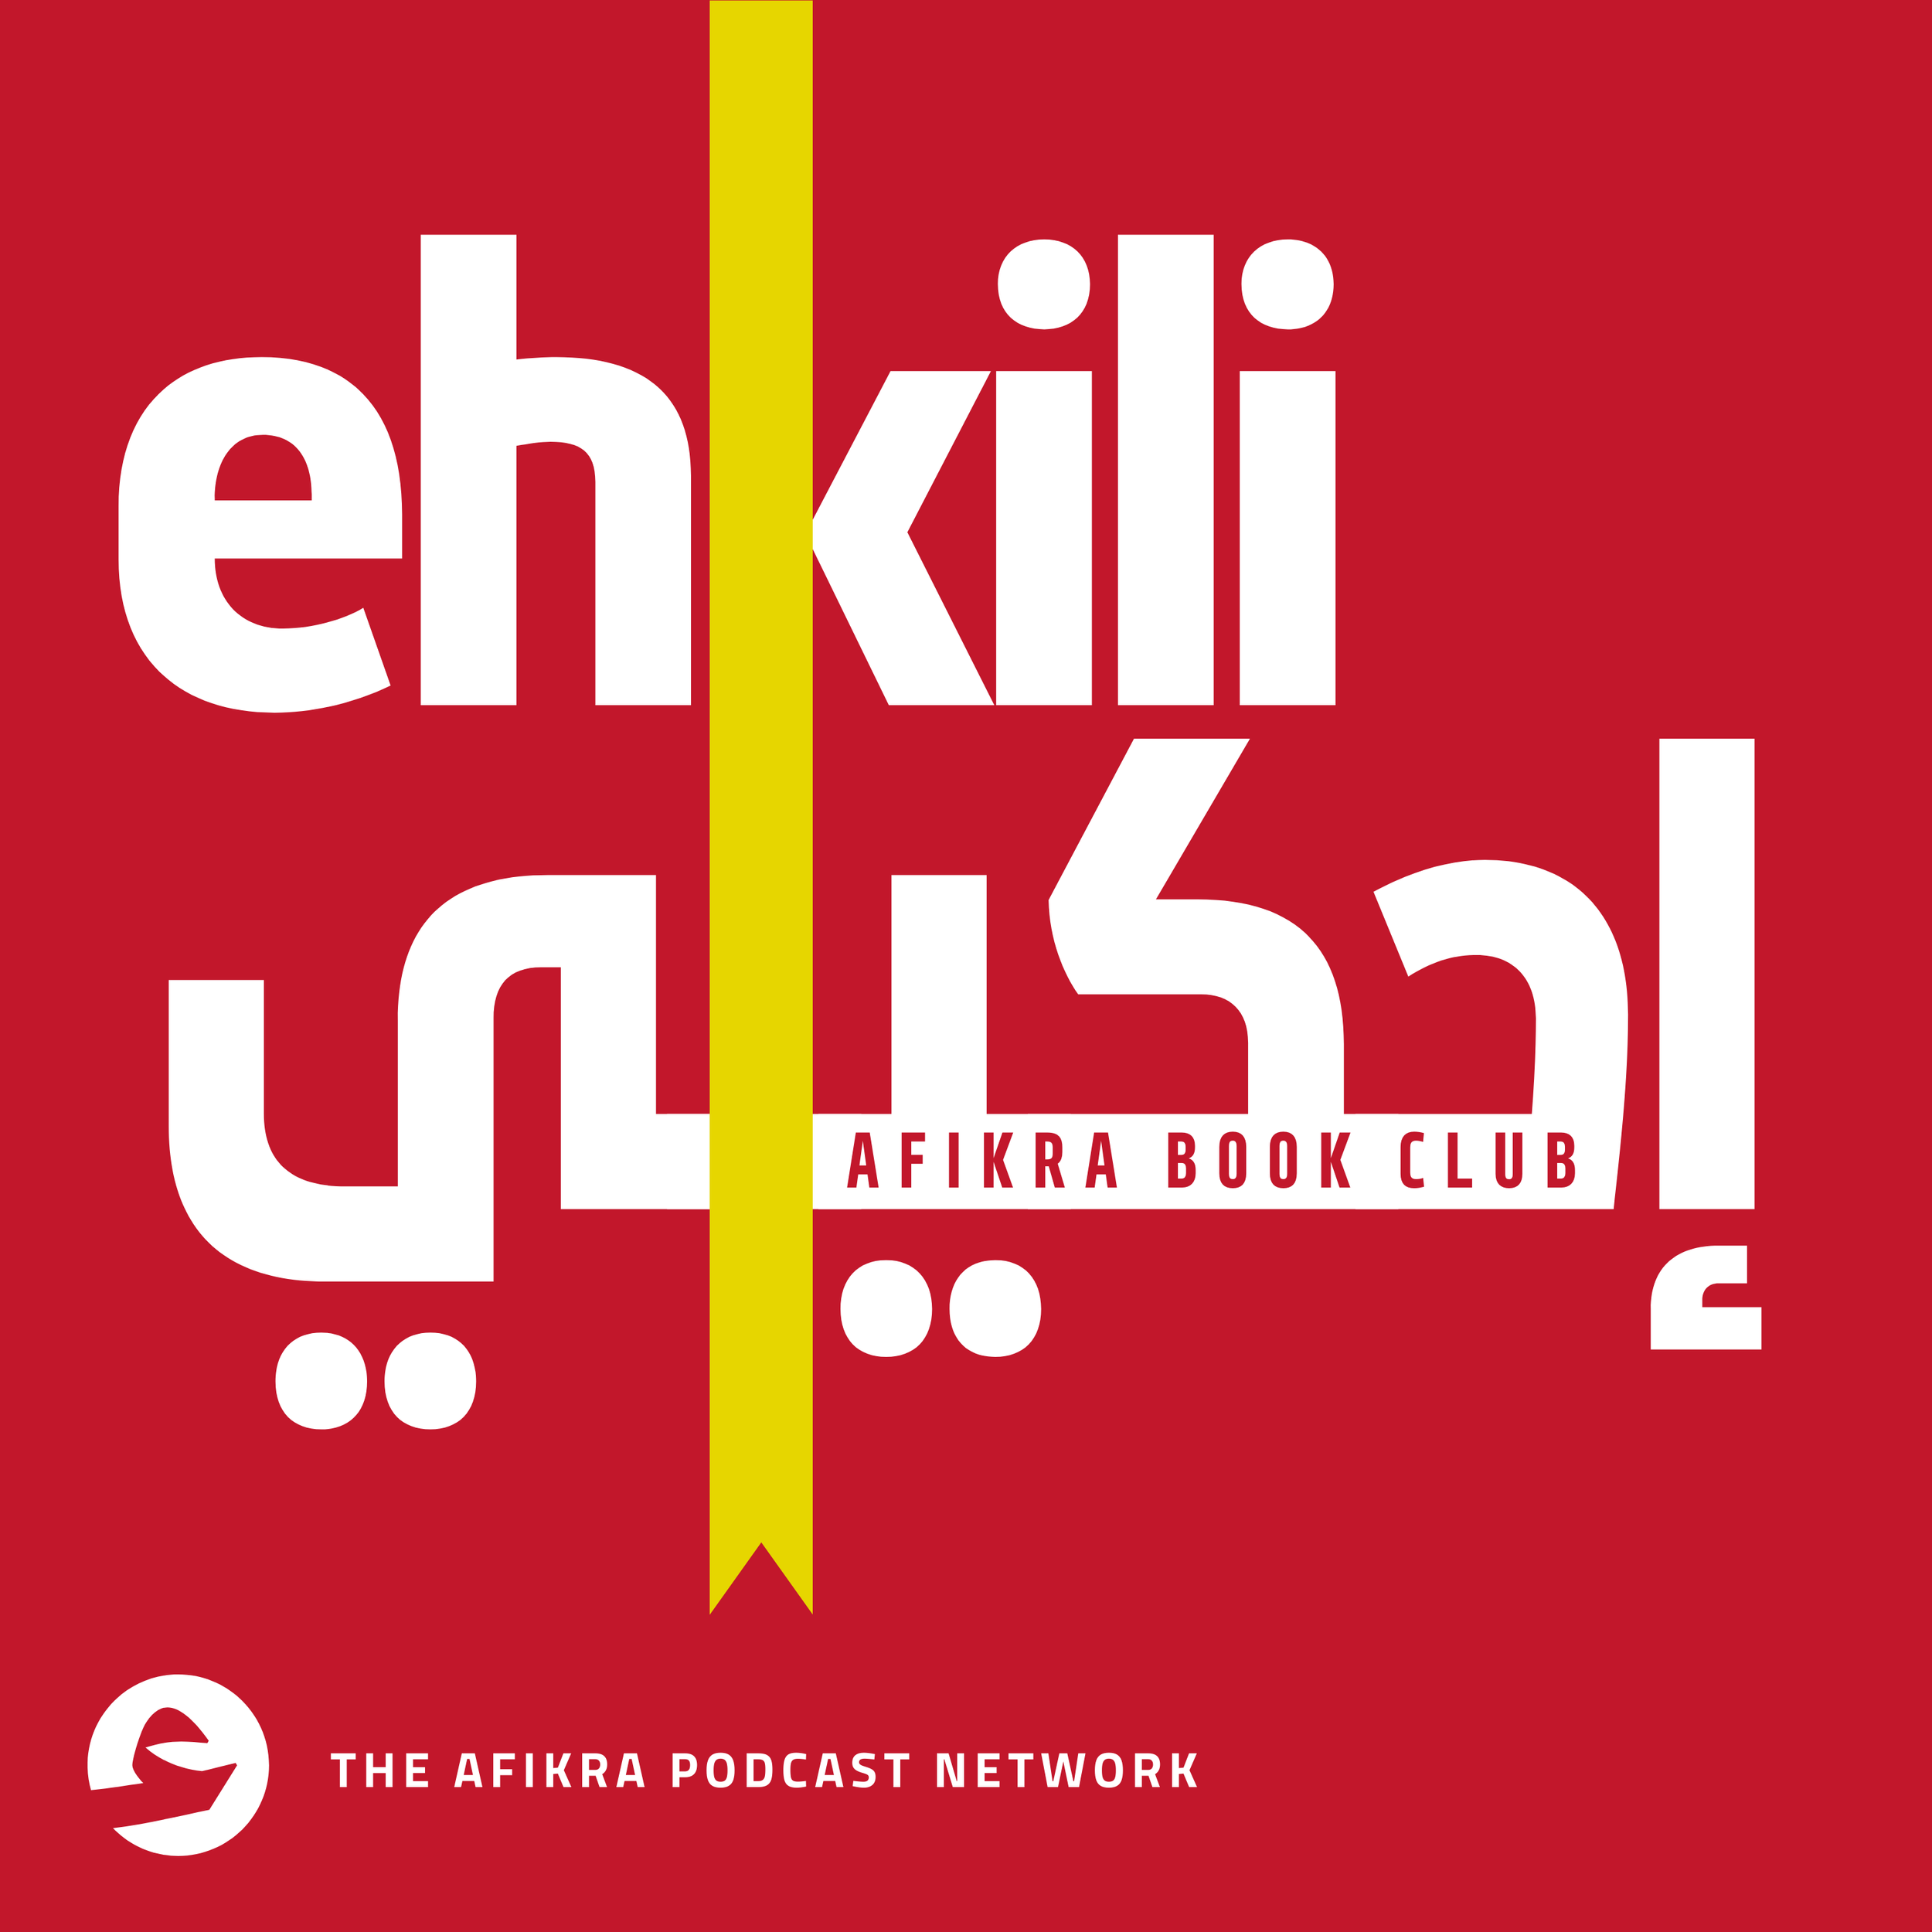 EHKILI | AFIKRA BOOK CLUB